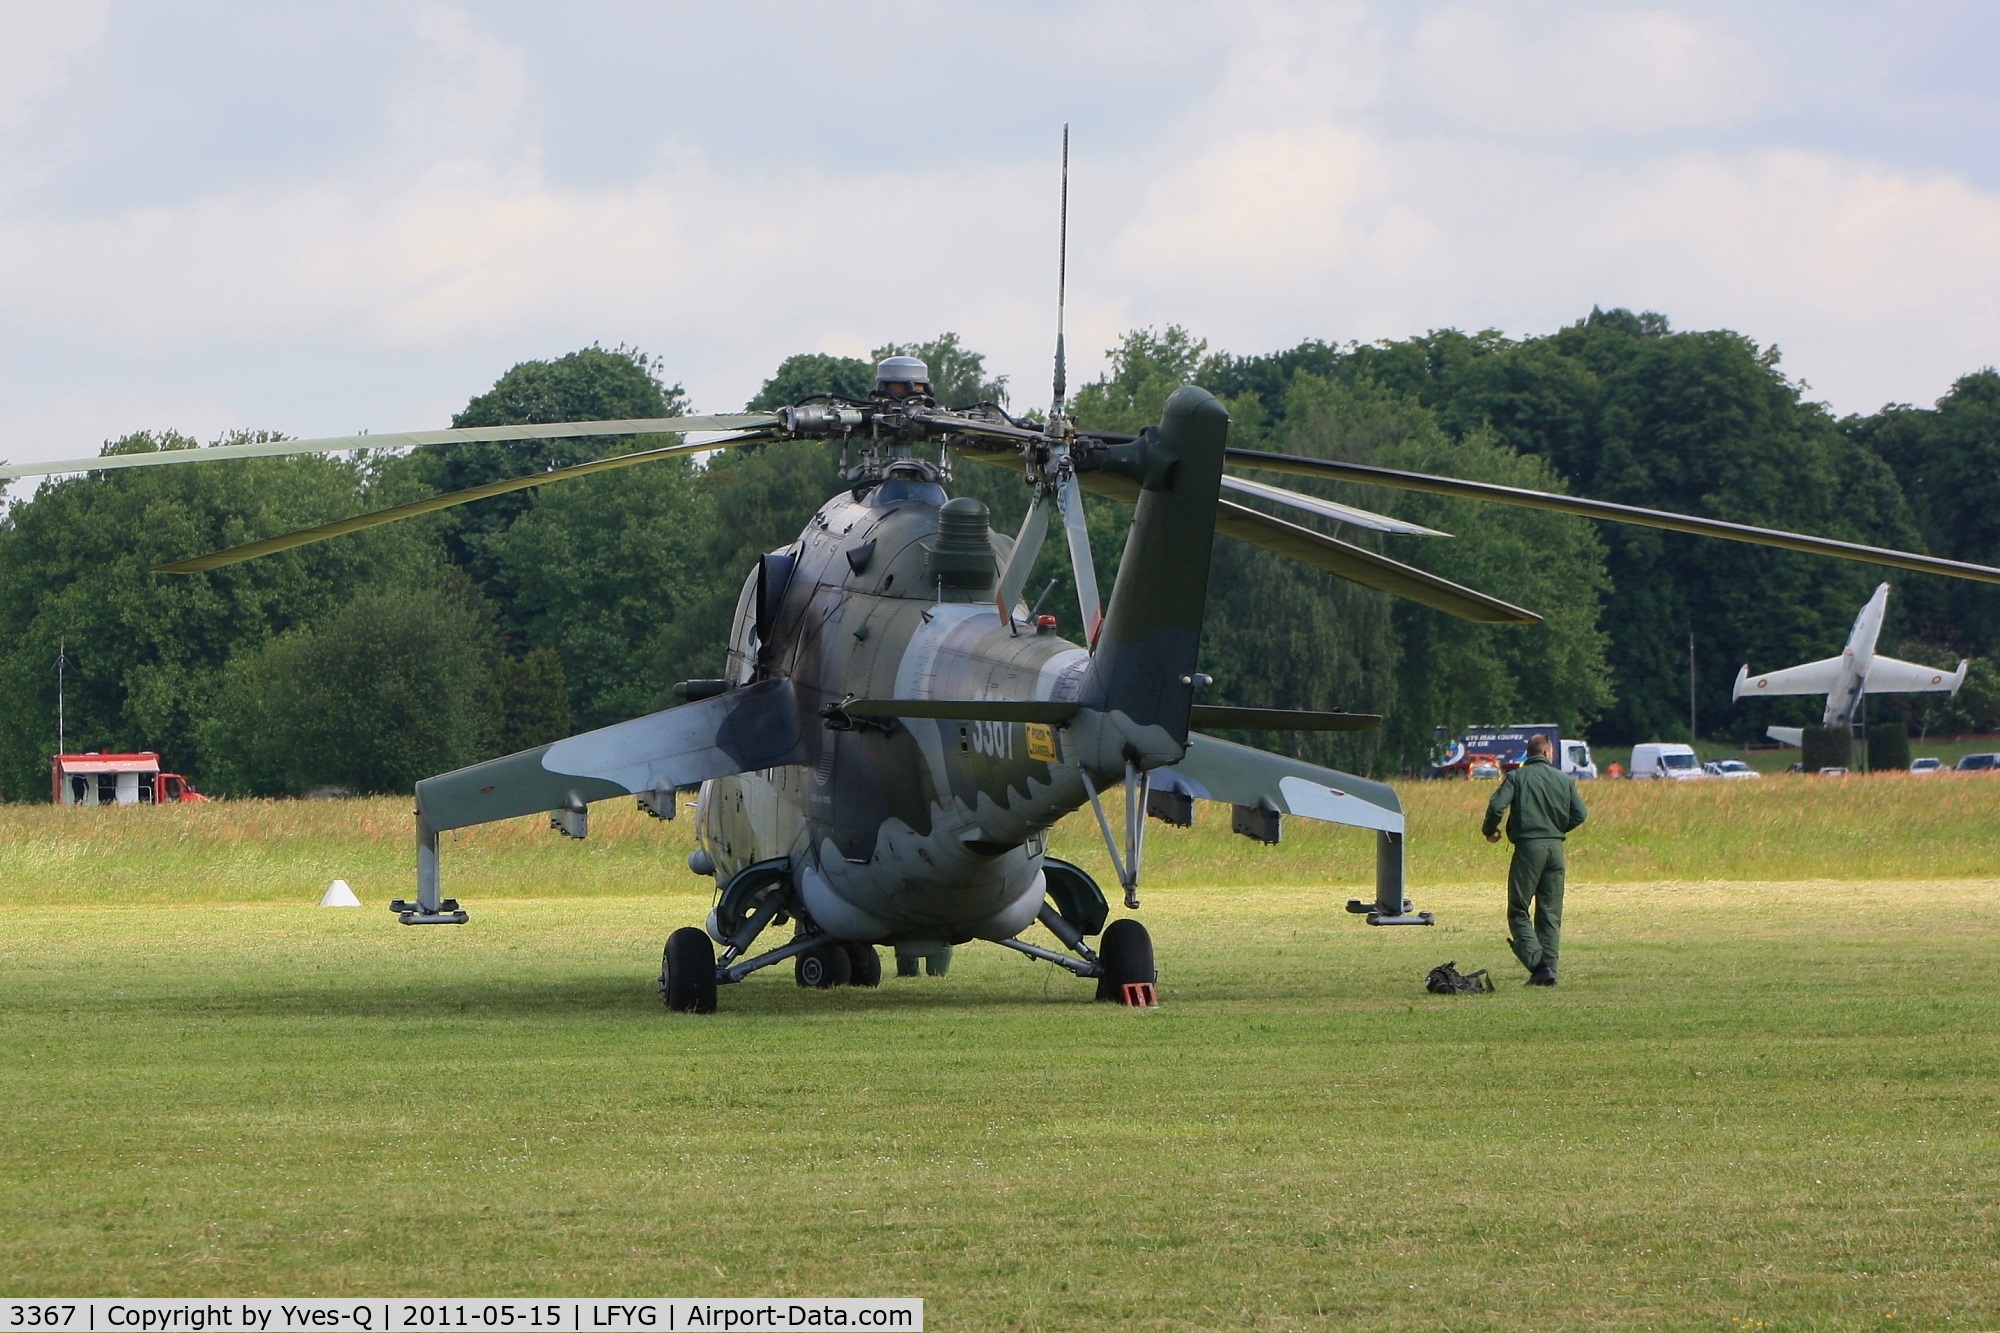 3367, 2005 Mil Mi-35 Hind E C/N 203367, Czech Republic Air Force Mil MI 35 (203367), Cambrai-Niergnies Airfield (LFYG)